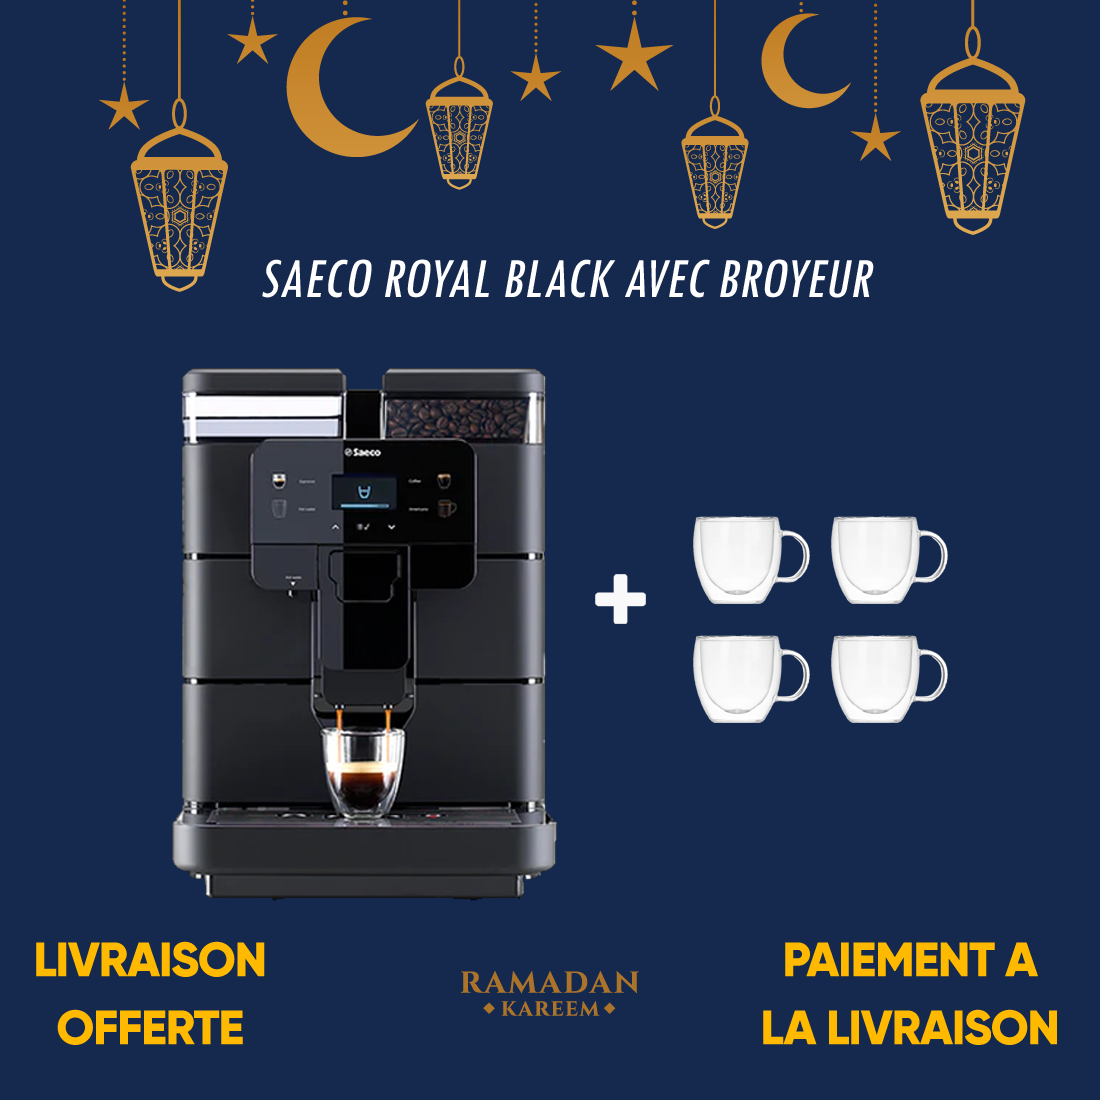 Saeco Royal Black avec broyeur - Offre Ramadan